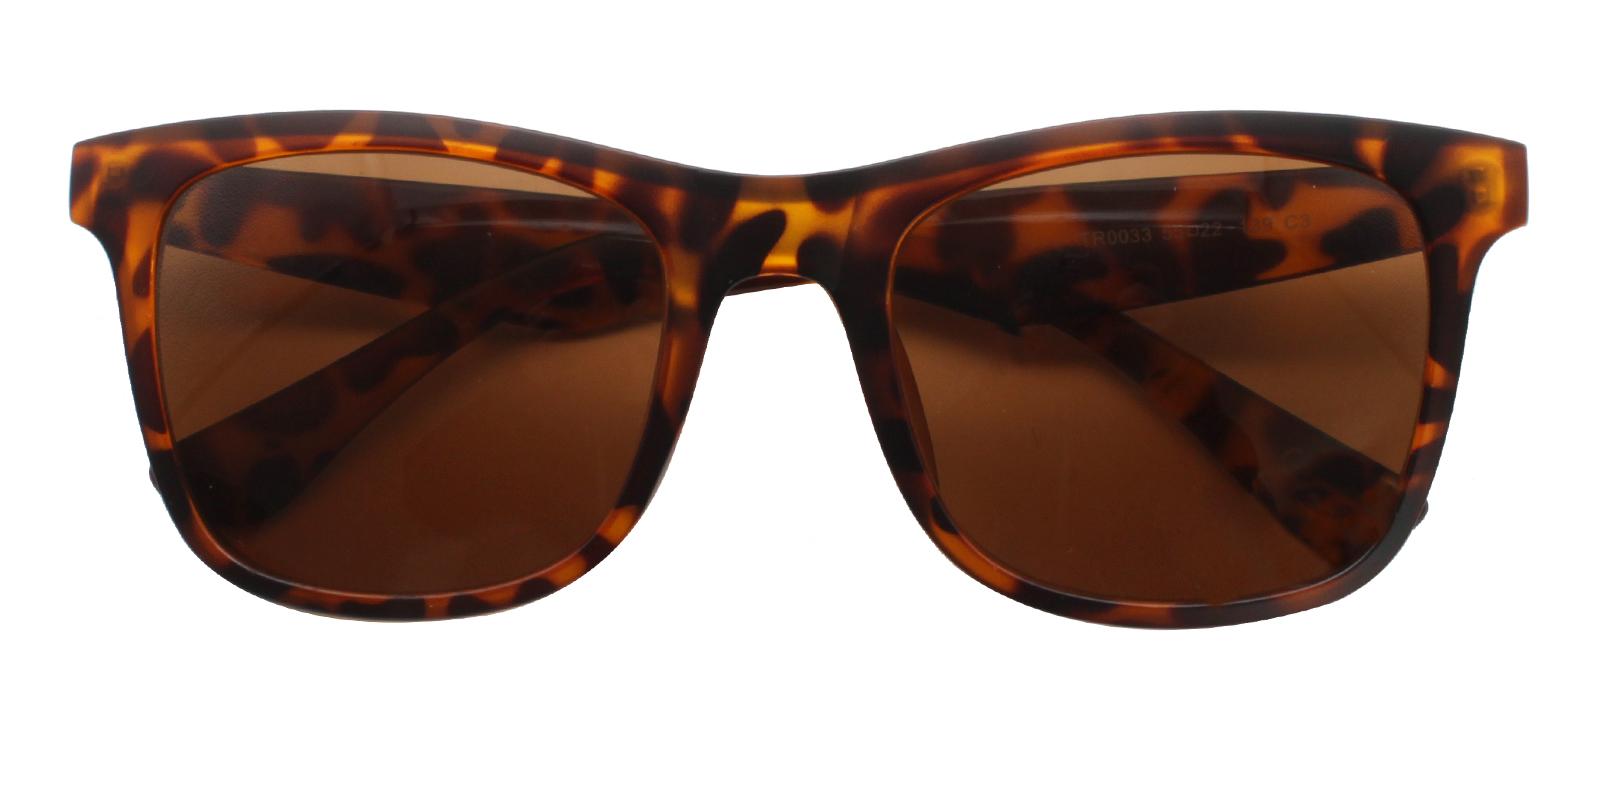 Oman Brown TR Sunglasses , UniversalBridgeFit Frames from ABBE Glasses